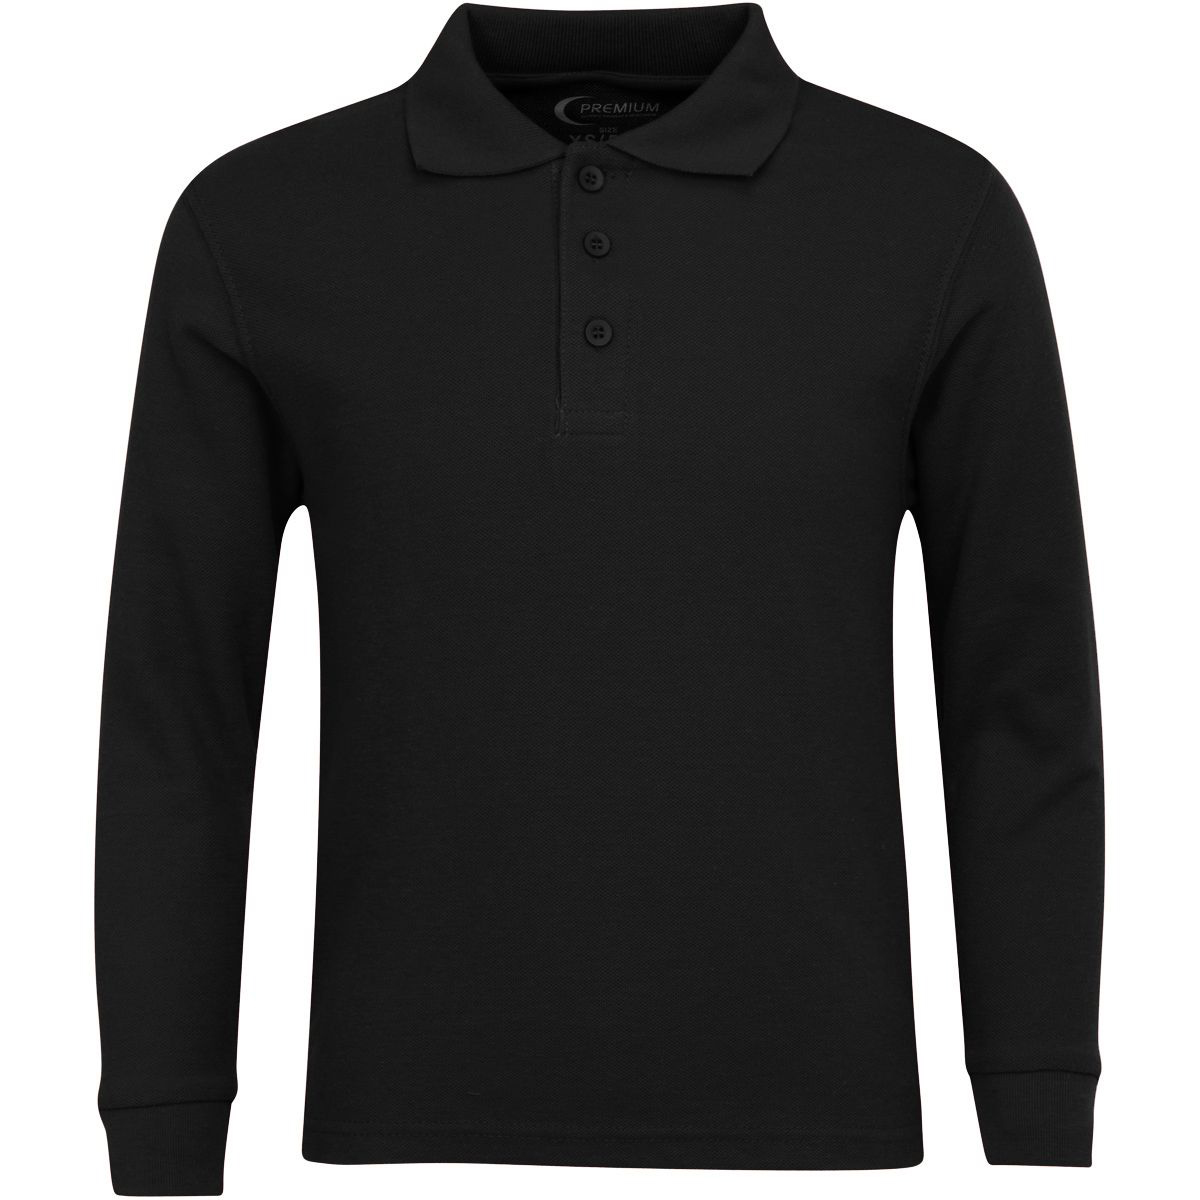 Boy's School UNIFORM Long-Sleeve Shirts - Black - Choose Your Sizes (3/4-18/20)